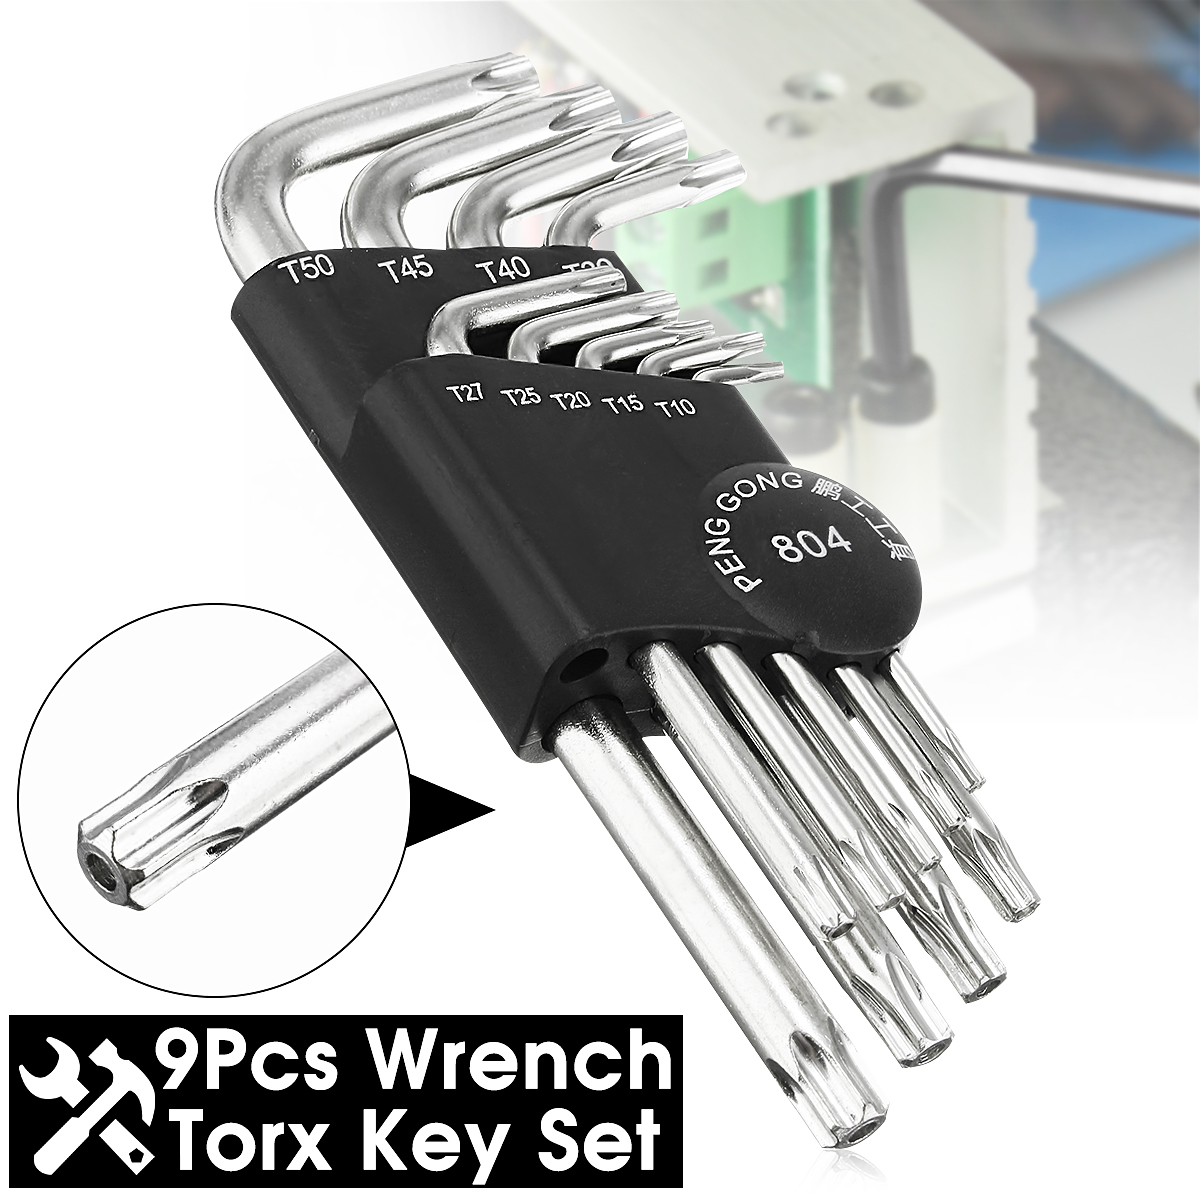 PENGGONG-804-9pcs-Torx-Hex-Wrench-Screwdriver-Star-Key-L-Wrench-Set-1296787-4